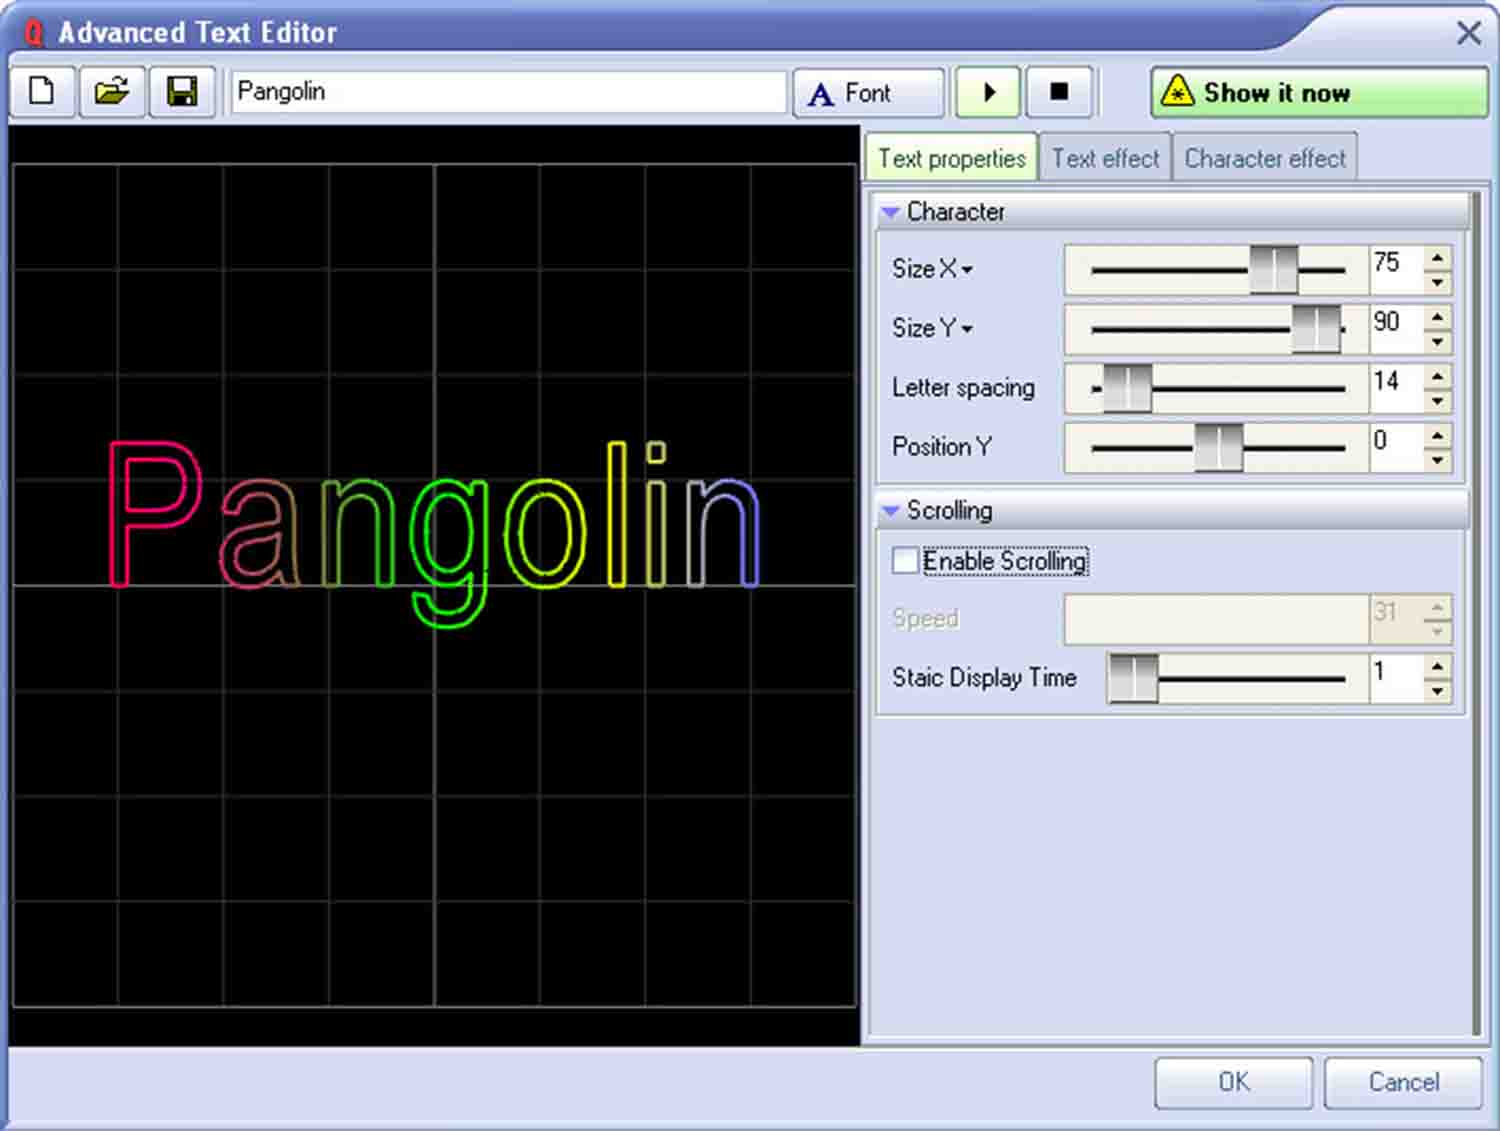 Pangolin FB4ILDA Laser Light Control System - Hollywood DJ